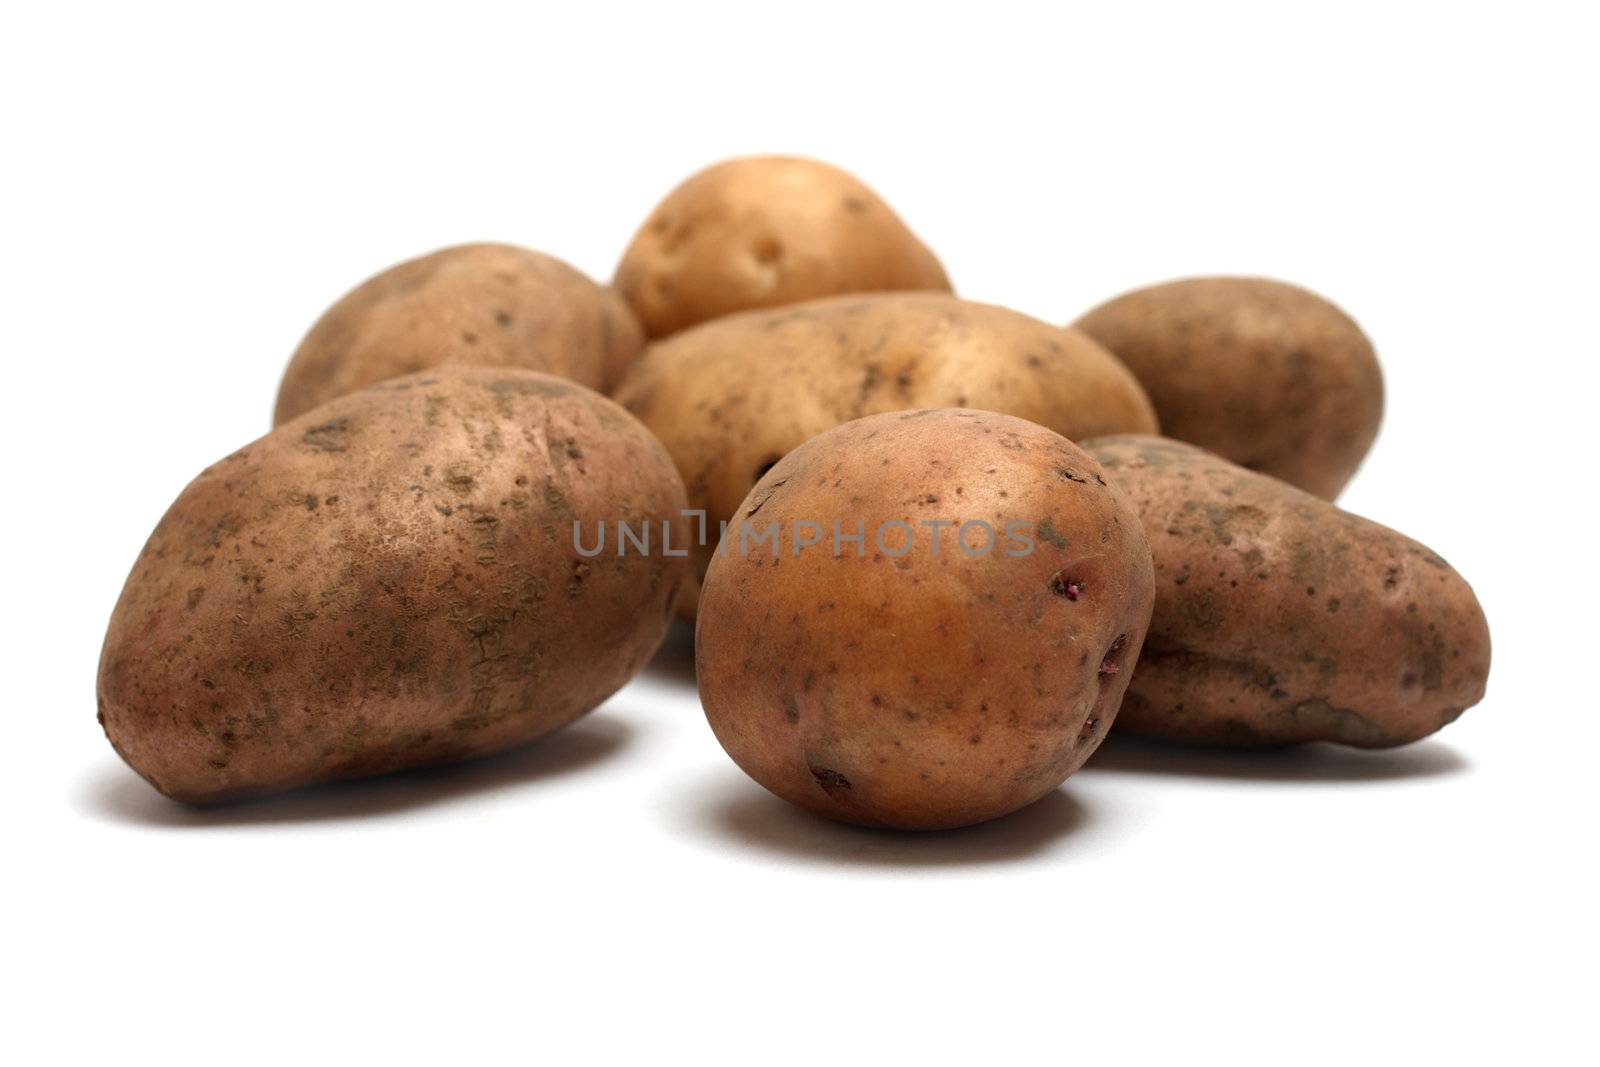 Pile of organic raw potatoes by Gdolgikh